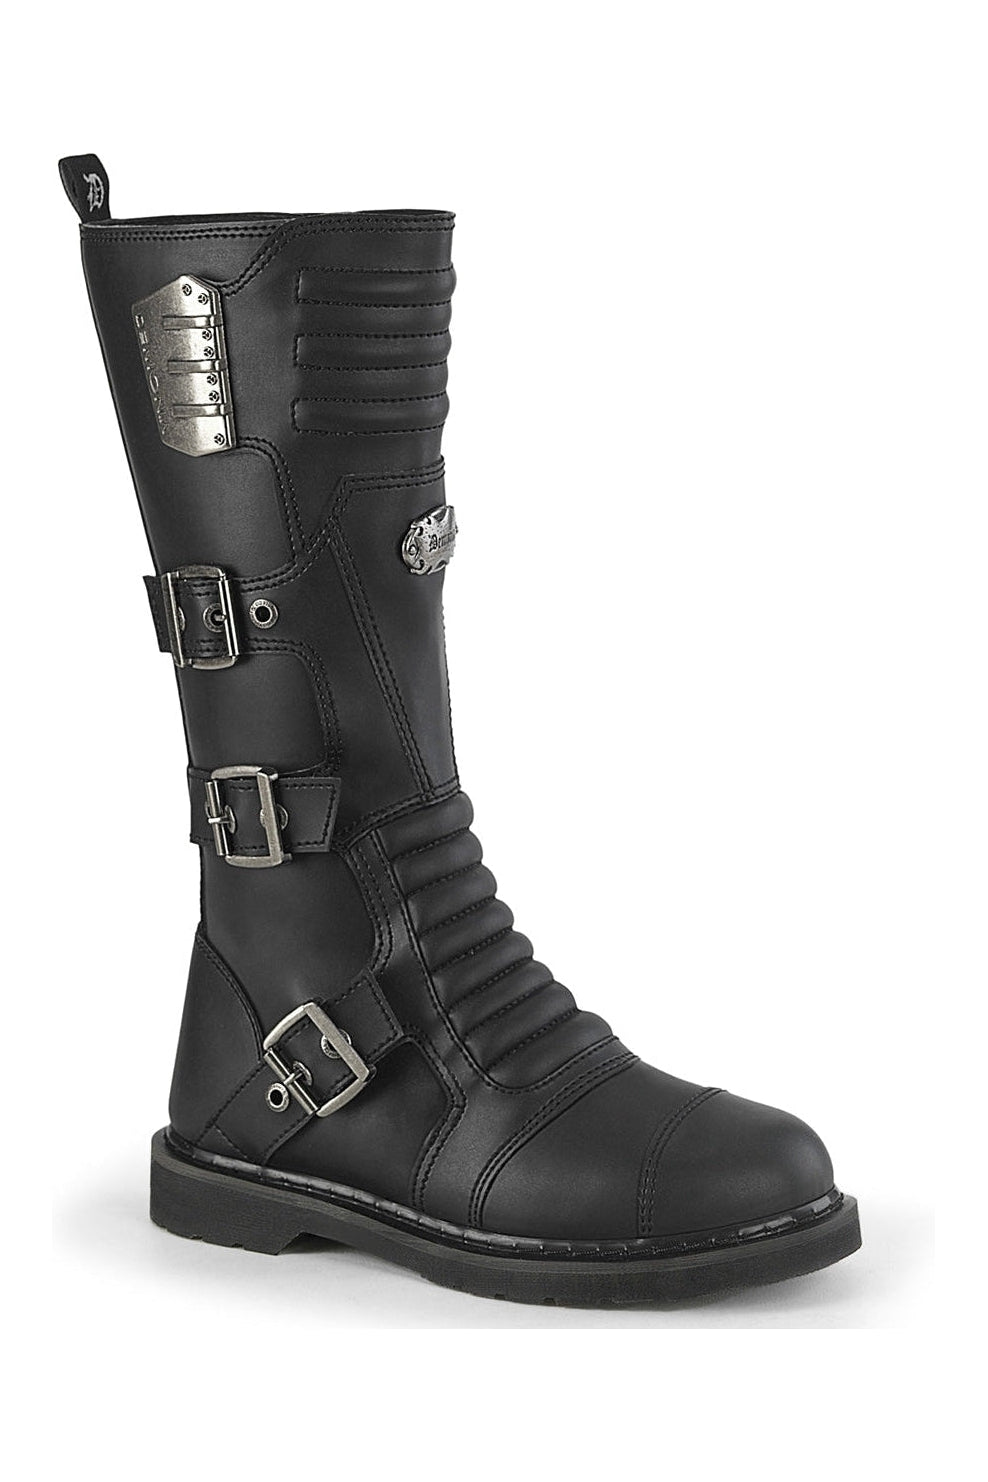 BOLT-405 Black Vegan Leather Combat Boot